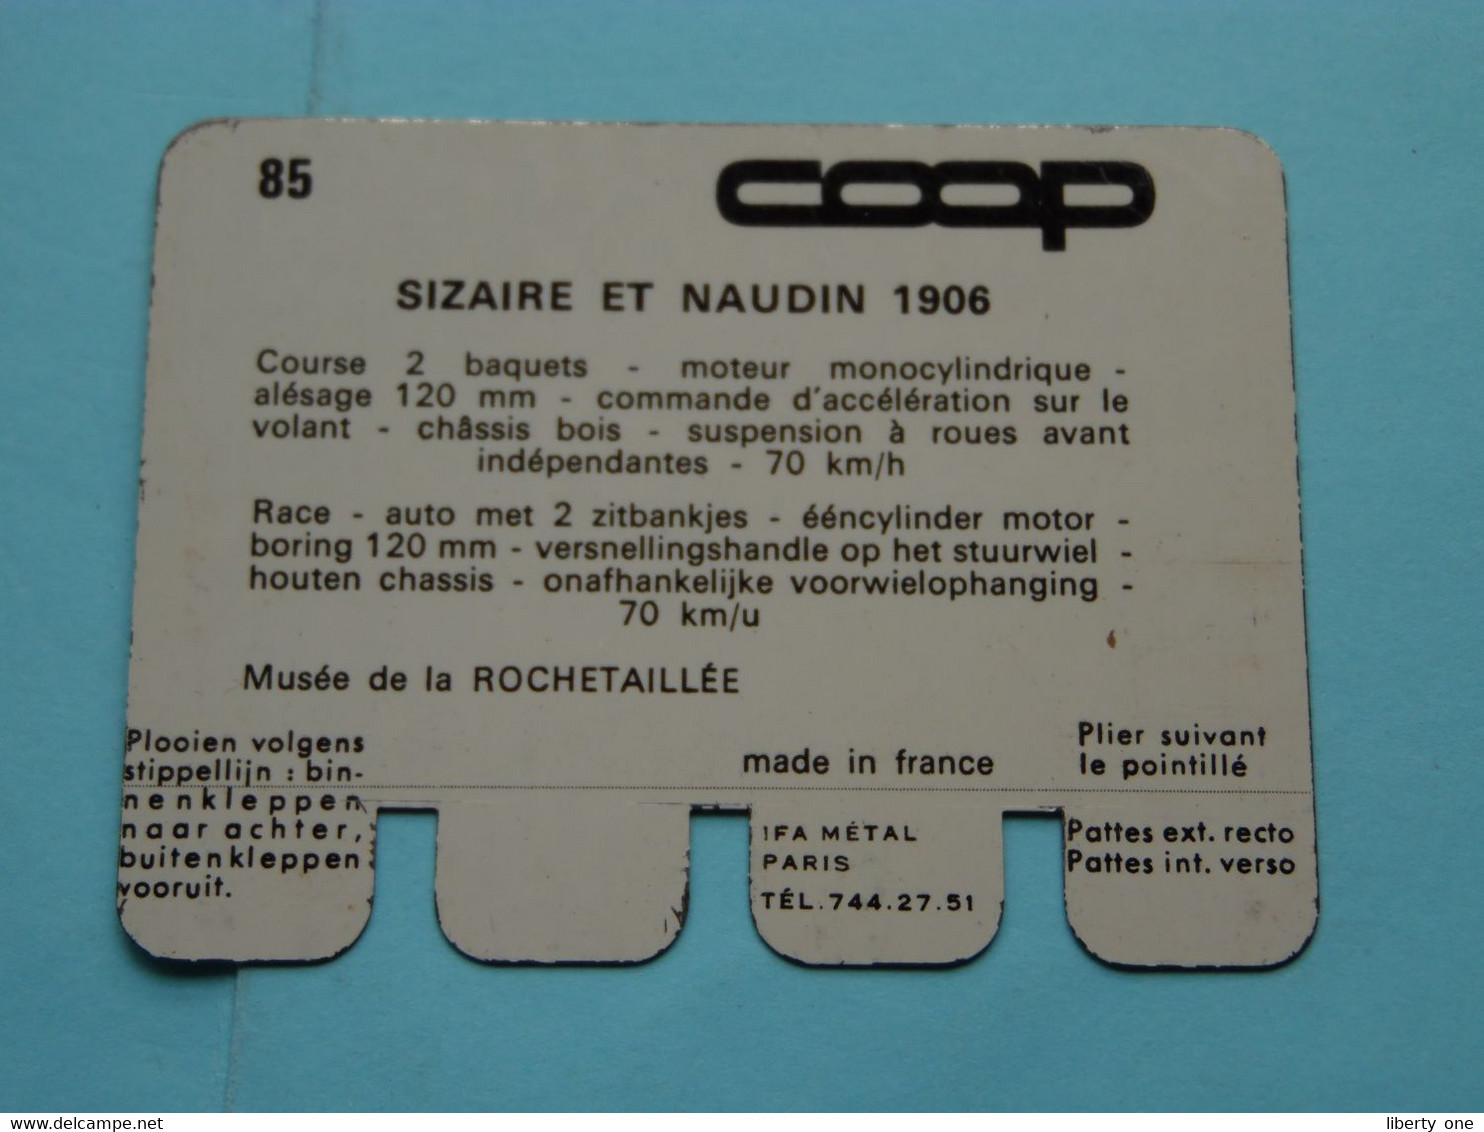 SIZAIRE ET NAUDIN 1906 - Coll. N° 85 NL/FR ( Plaquette C O O P - Voir Photo - IFA Metal Paris ) ! - Tin Signs (after1960)